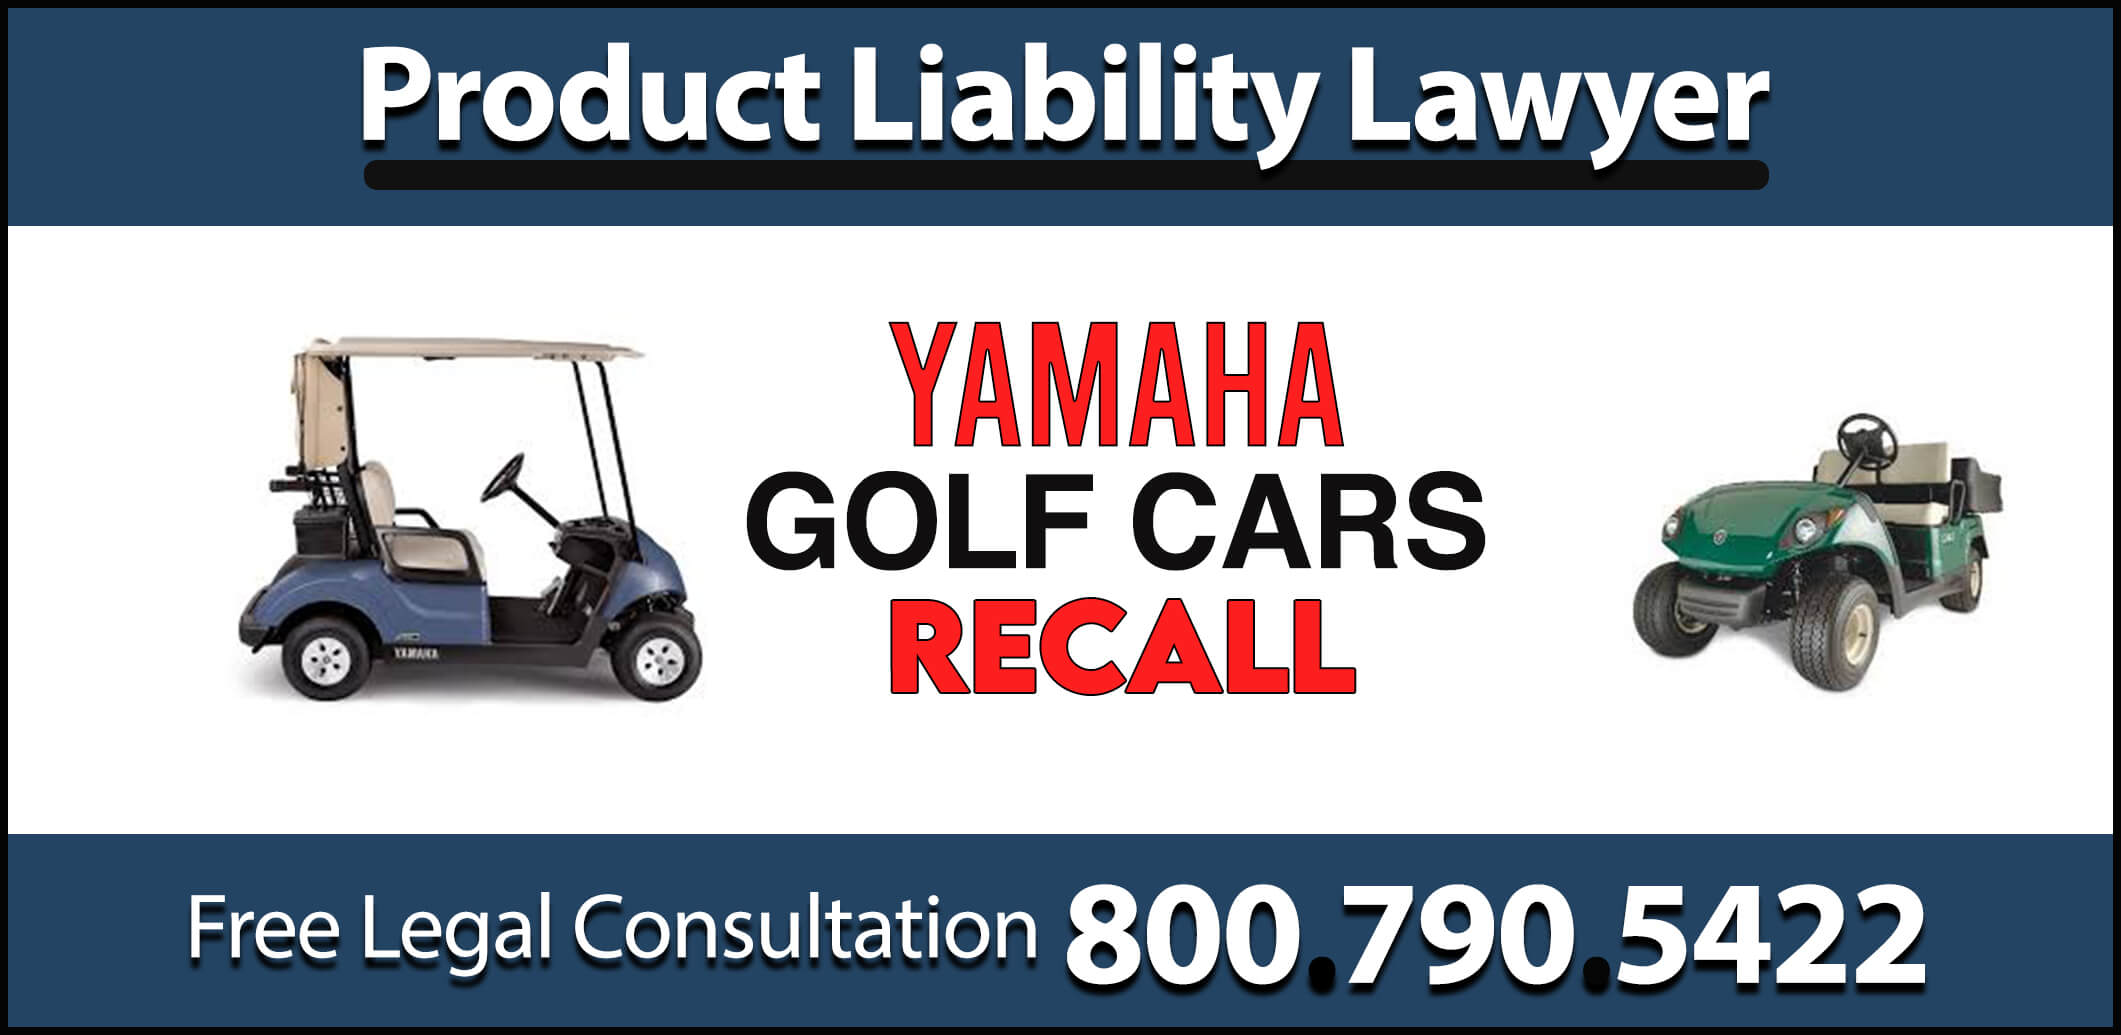 yamaha golf cars recall design flaw negligence lawsuit compensation hazard dangerous defective accident injury bruise sprain fracture